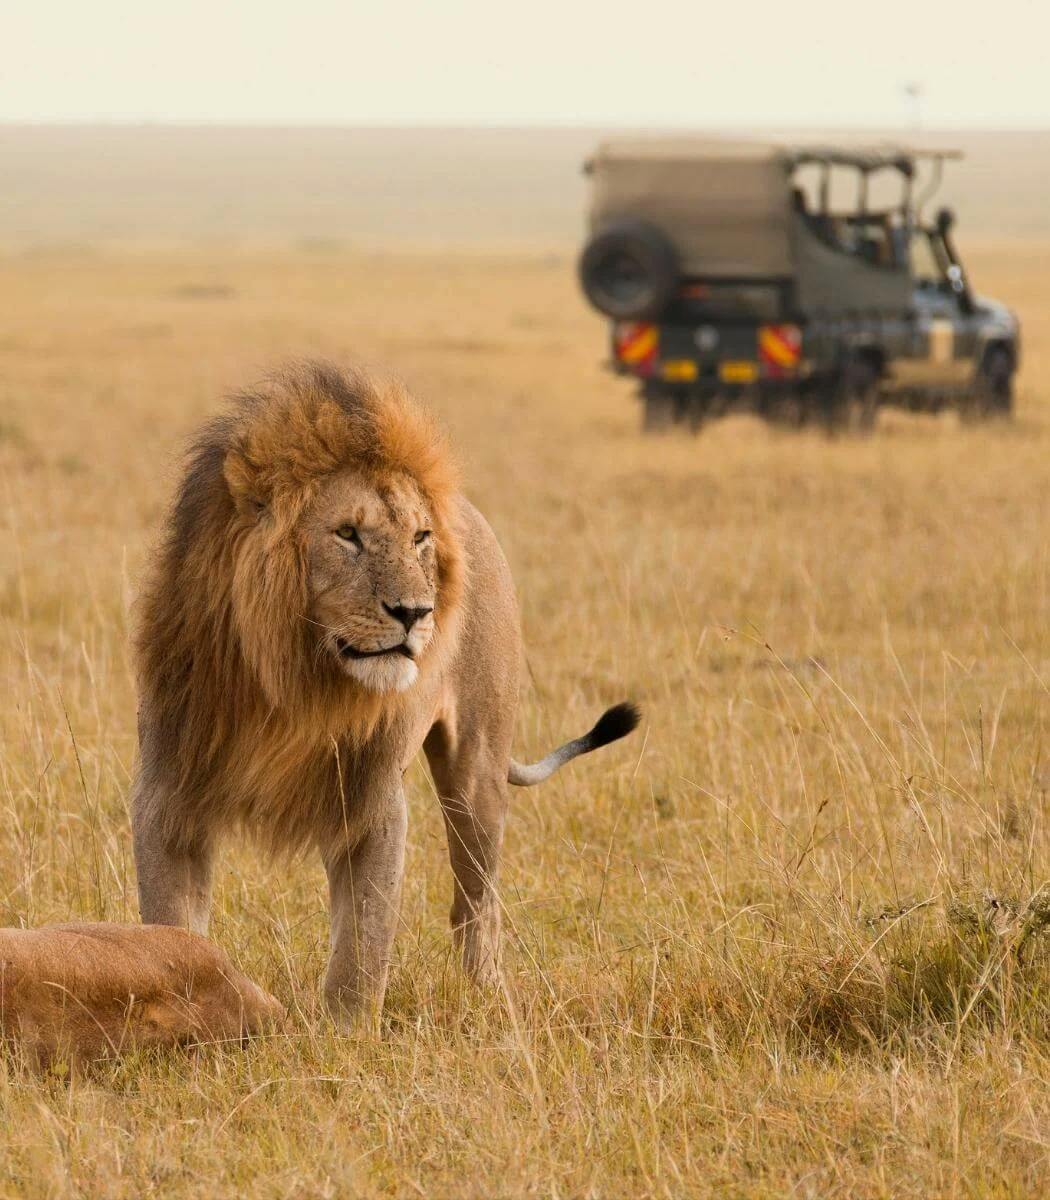 lion and jeep on safari